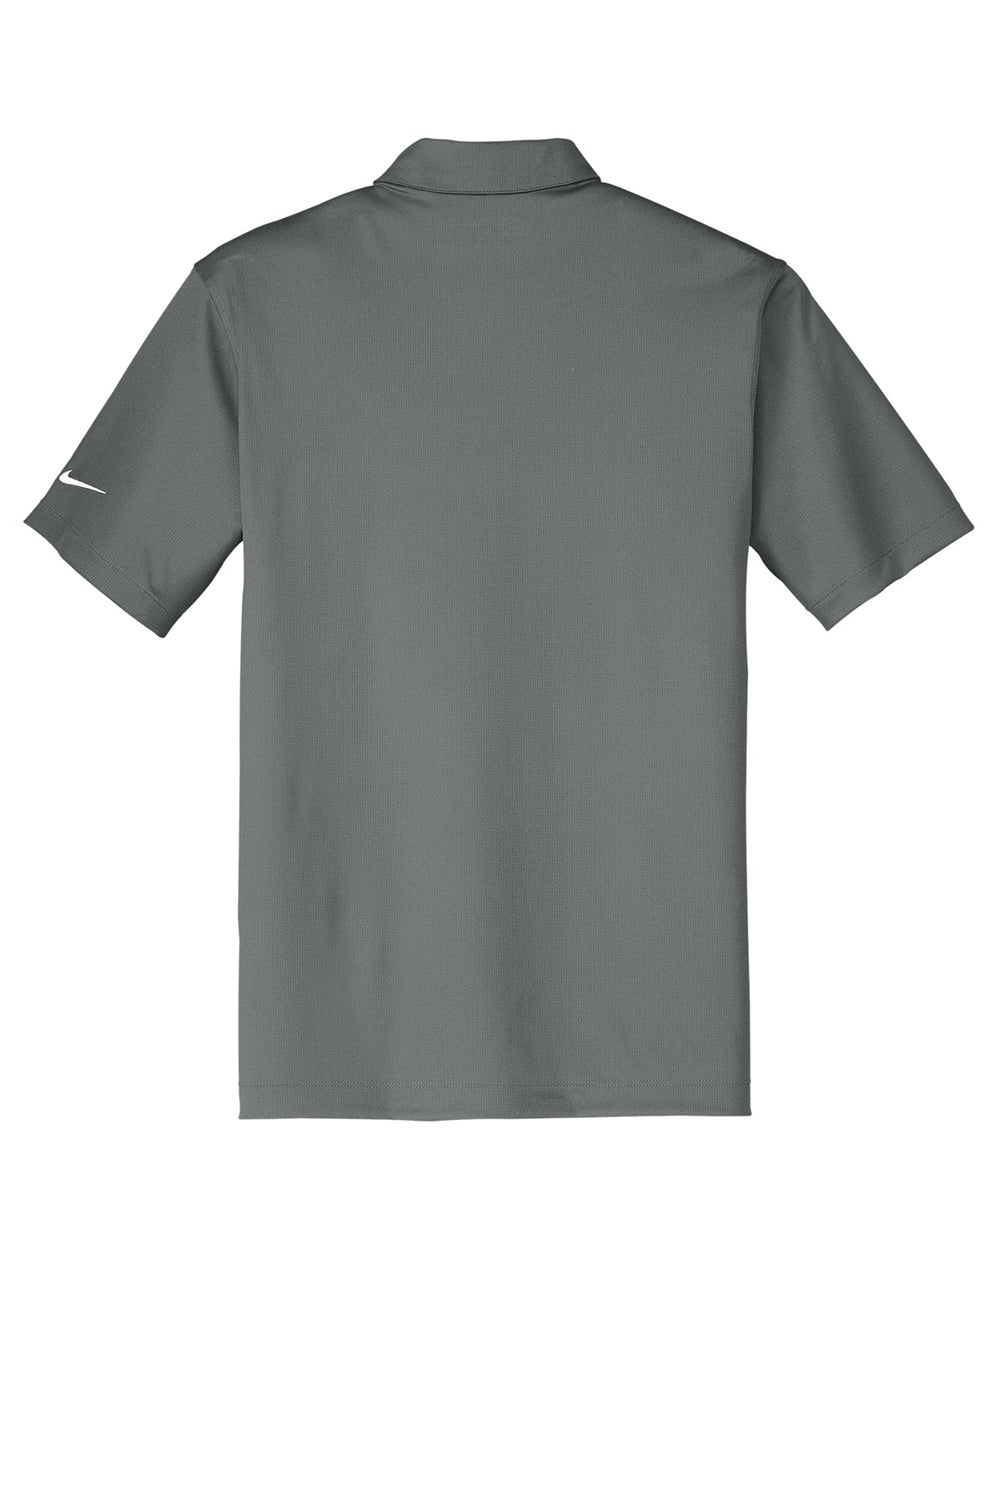 Nike 637167 Mens Dri-Fit Moisture Wicking Short Sleeve Polo Shirt Anthracite Grey Flat Back